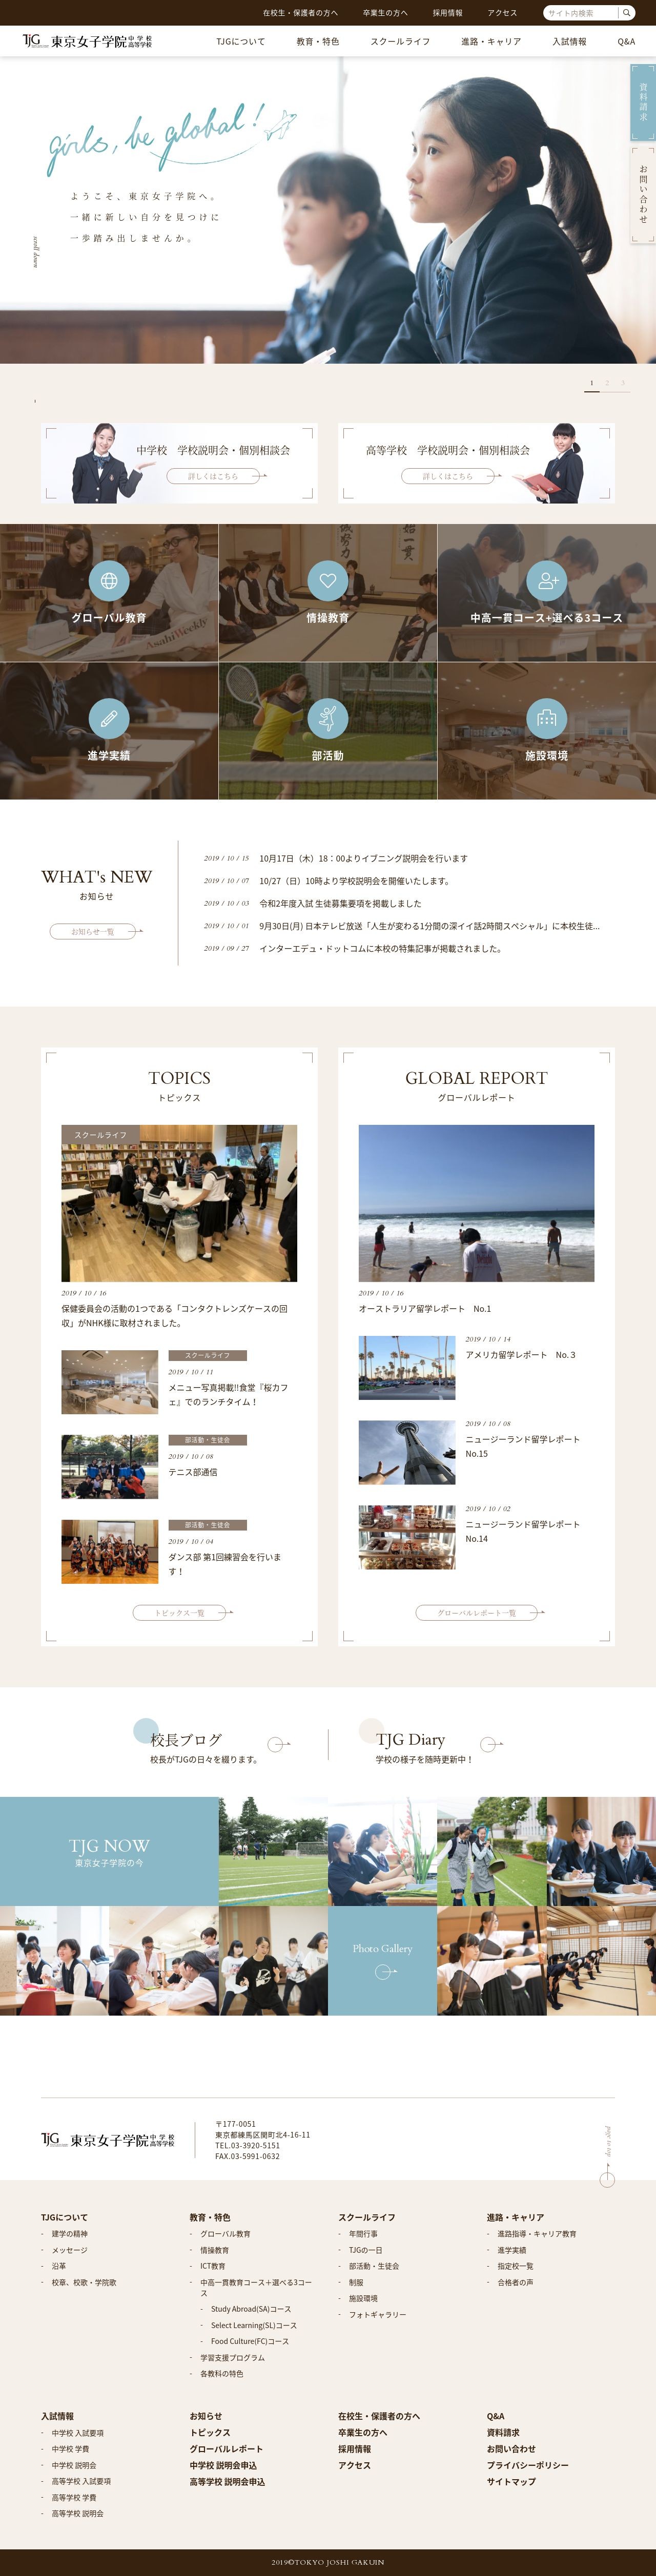 東京女子学院中学校 高等学校様 公式サイト Web制作 ホームページ制作実績 Web幹事